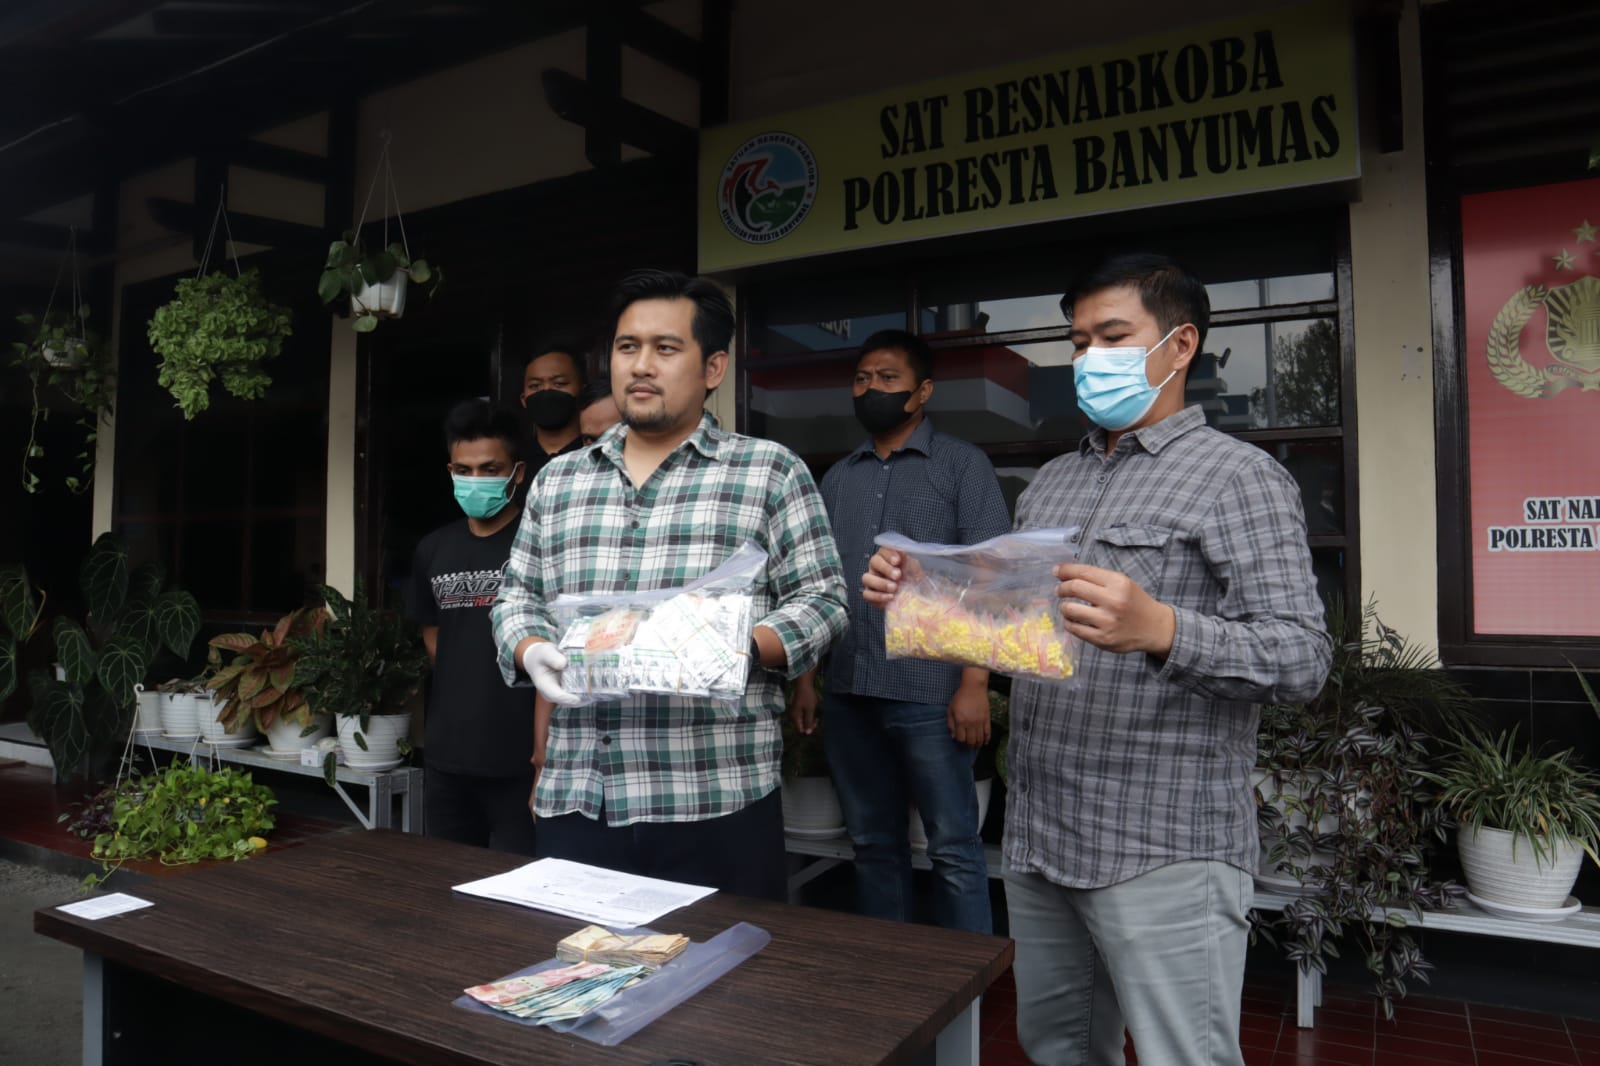 5 Pengedar Pil Koplo Warga Aceh di Banyumas Ditangkap, Polisi : Jaringannya Rapi